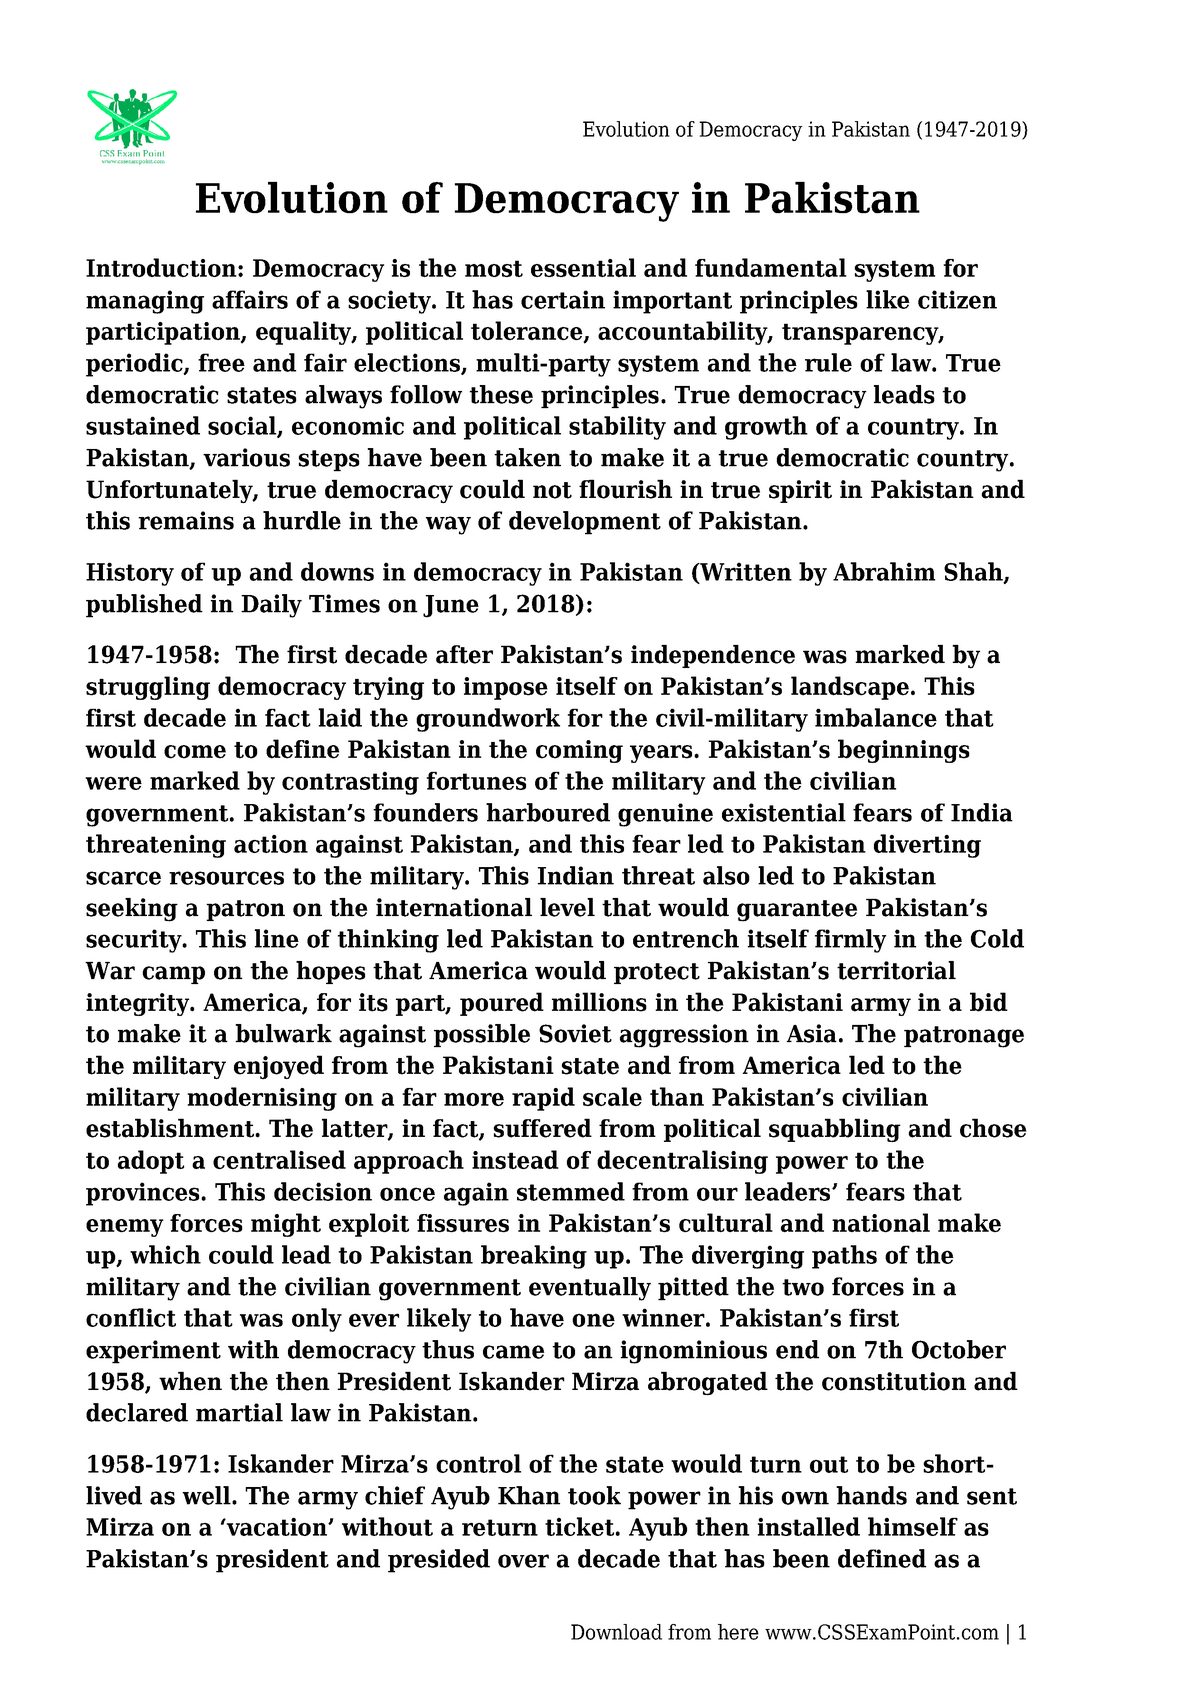 future of democracy in pakistan essay pdf